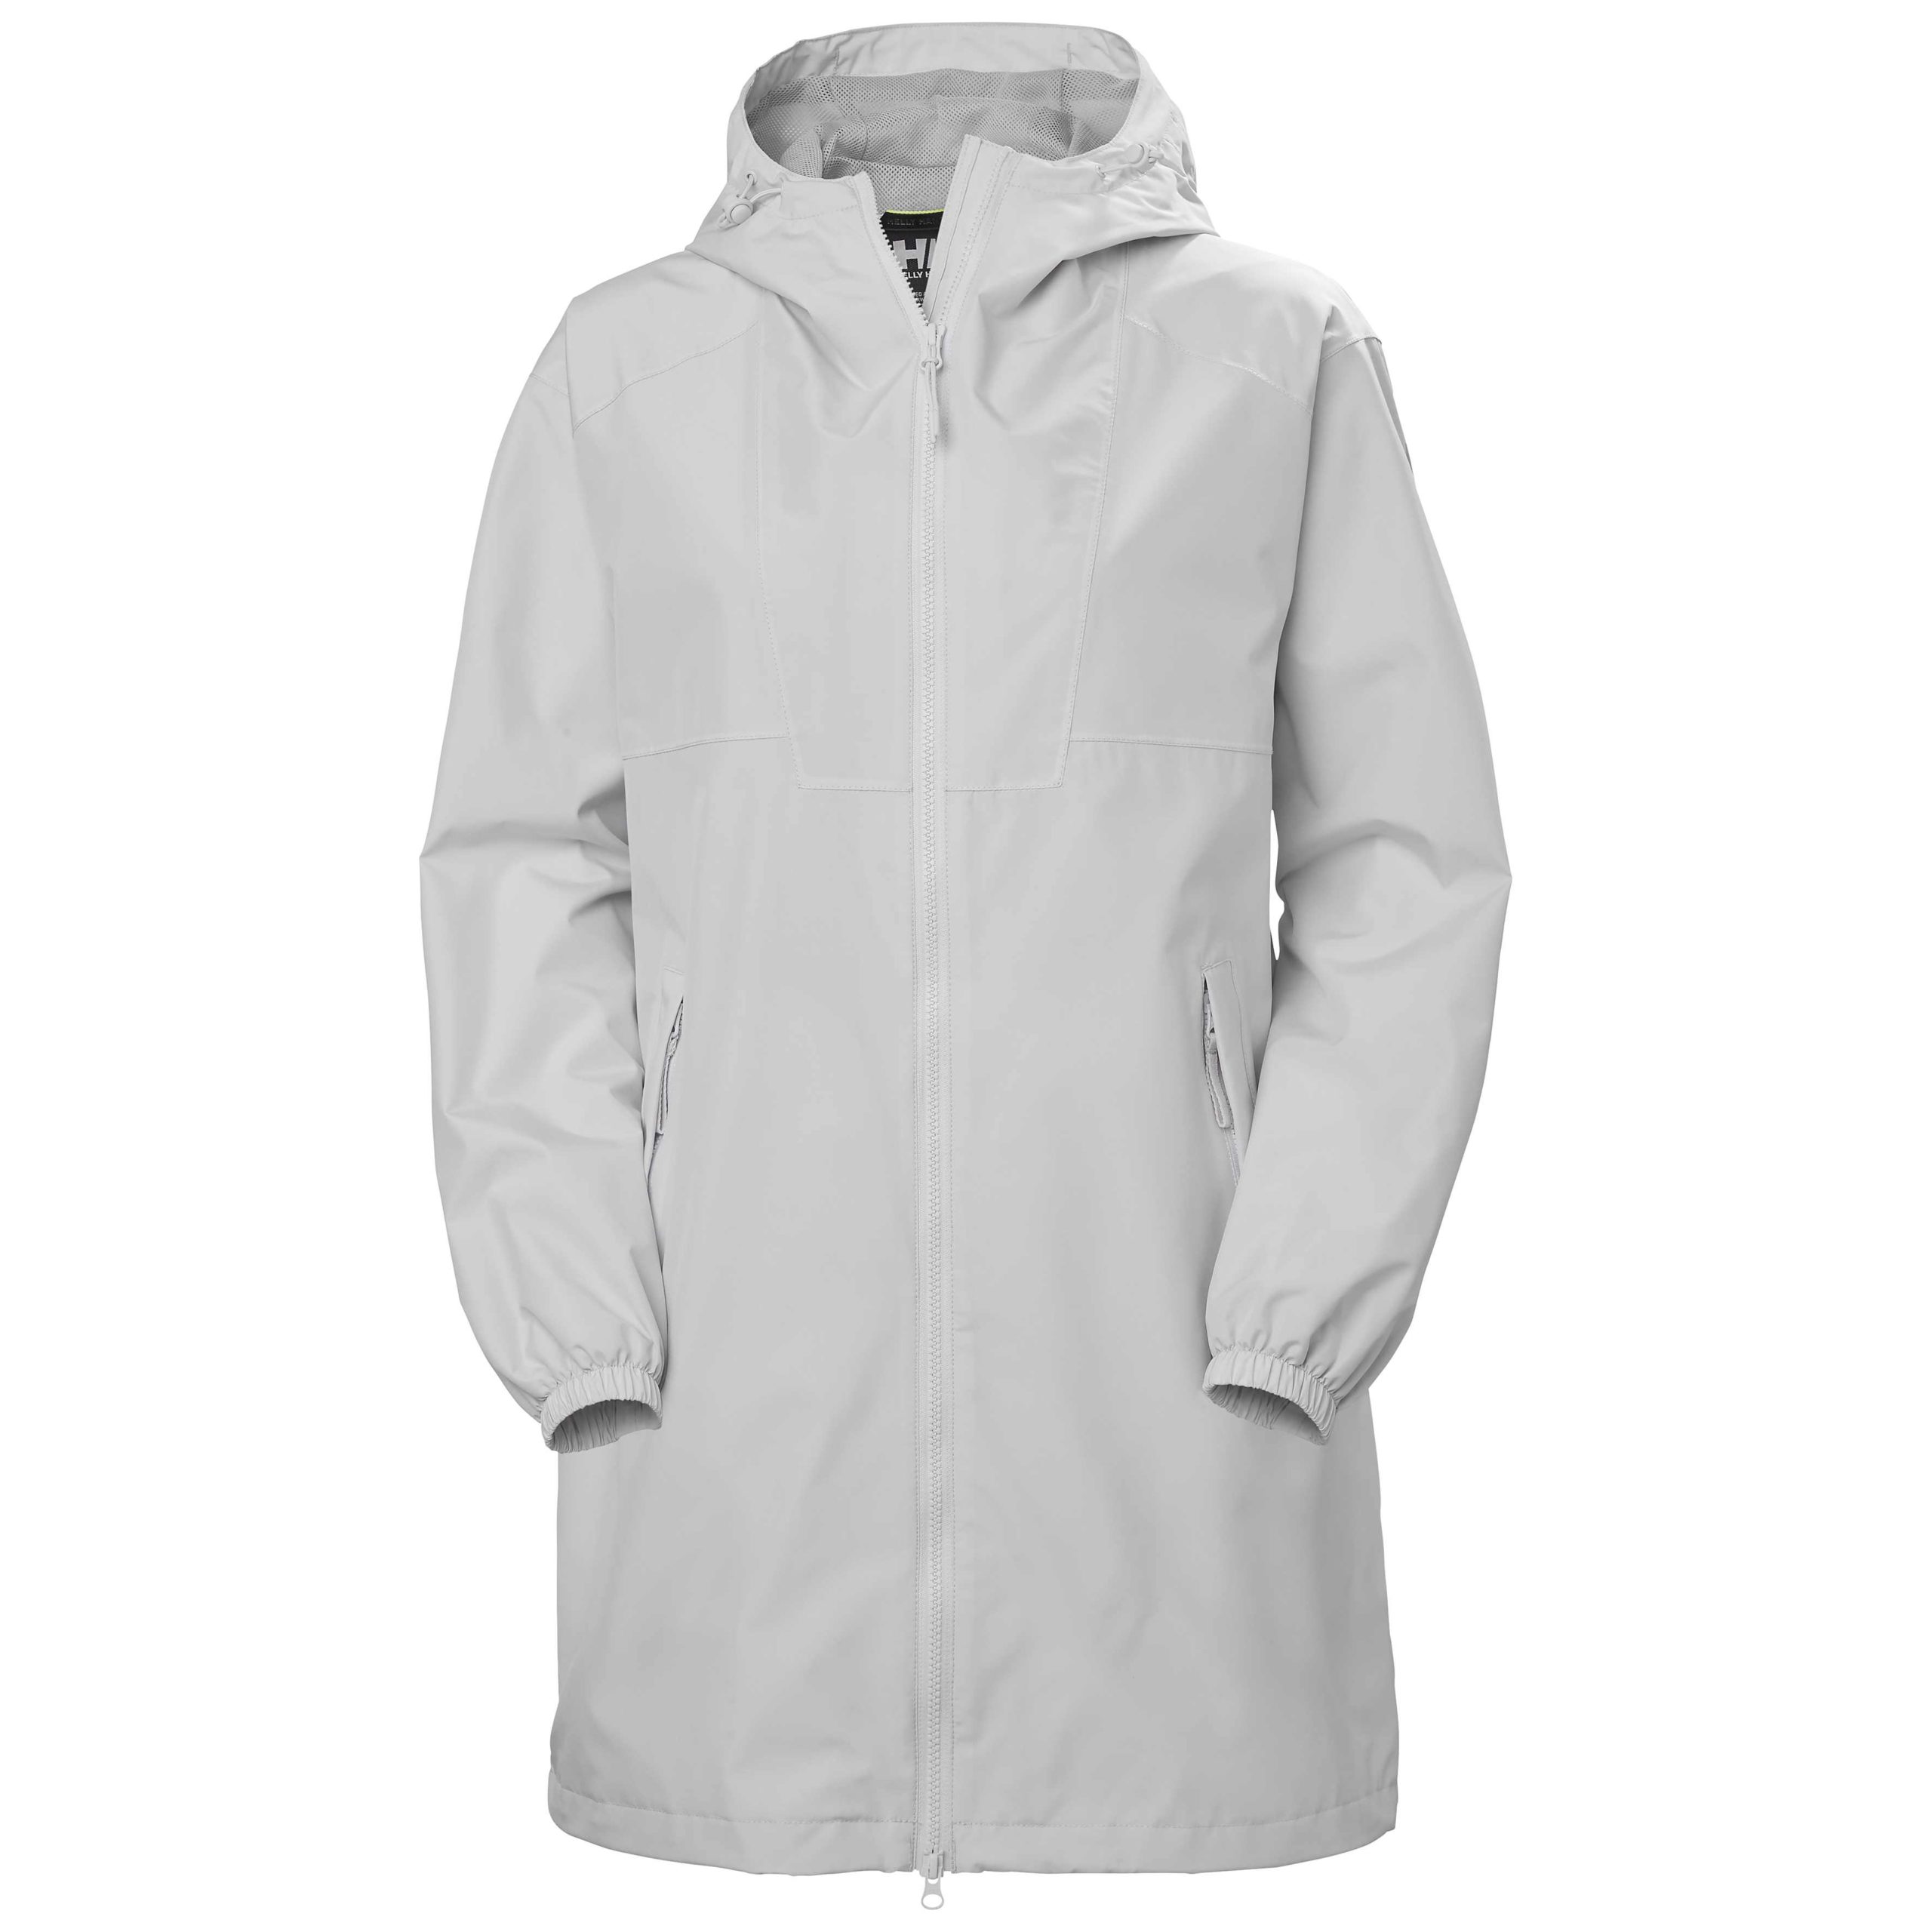 Elijo Rain Jacket, Women's White Water-Resistant Jacket